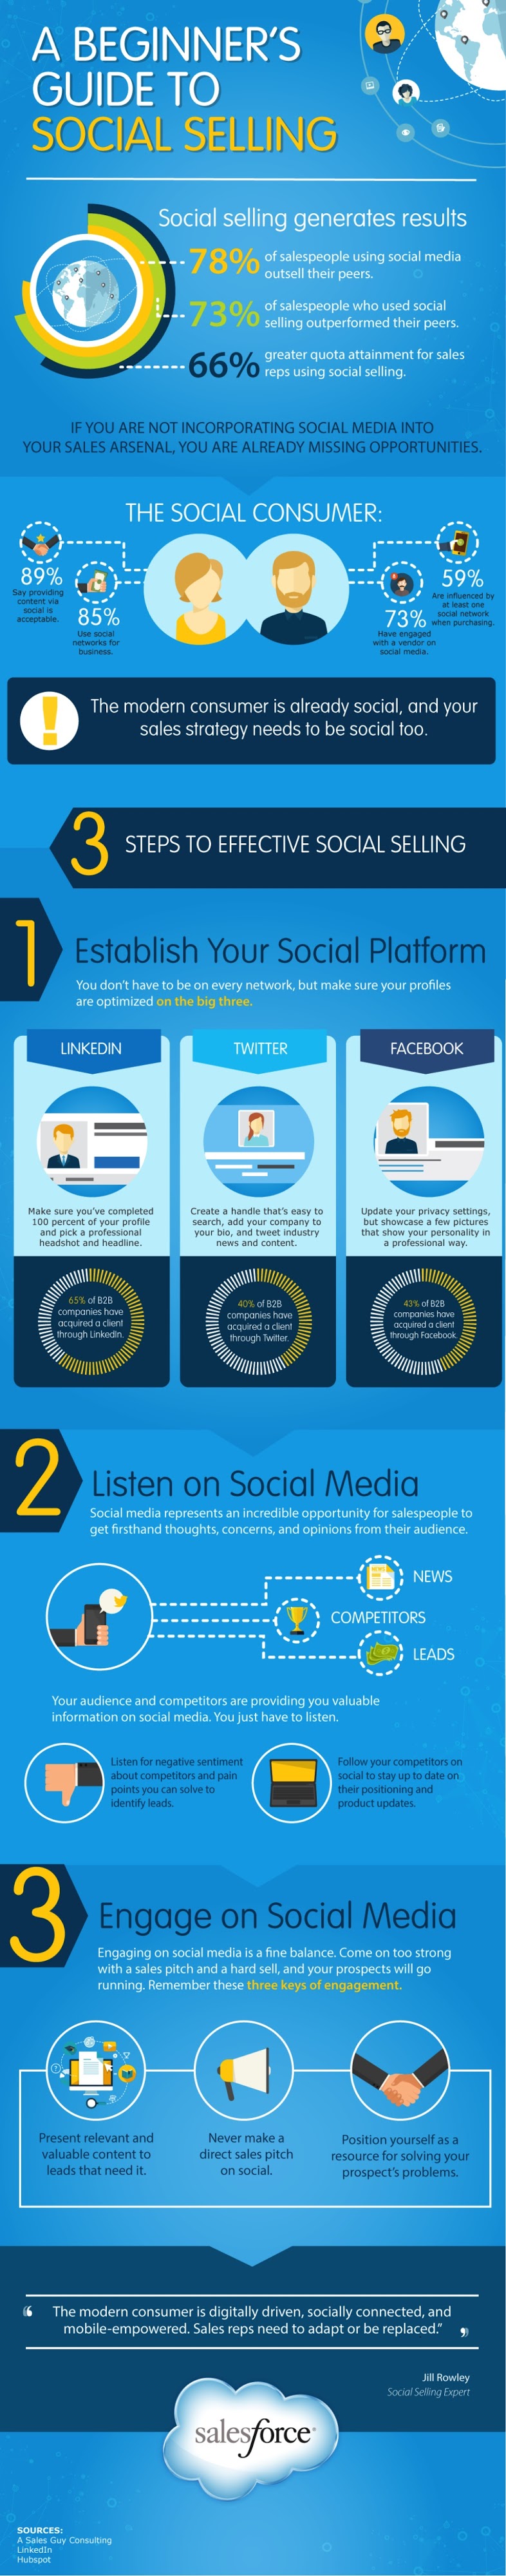 The Beginners Guide to Social Selling #socialmediamarketing